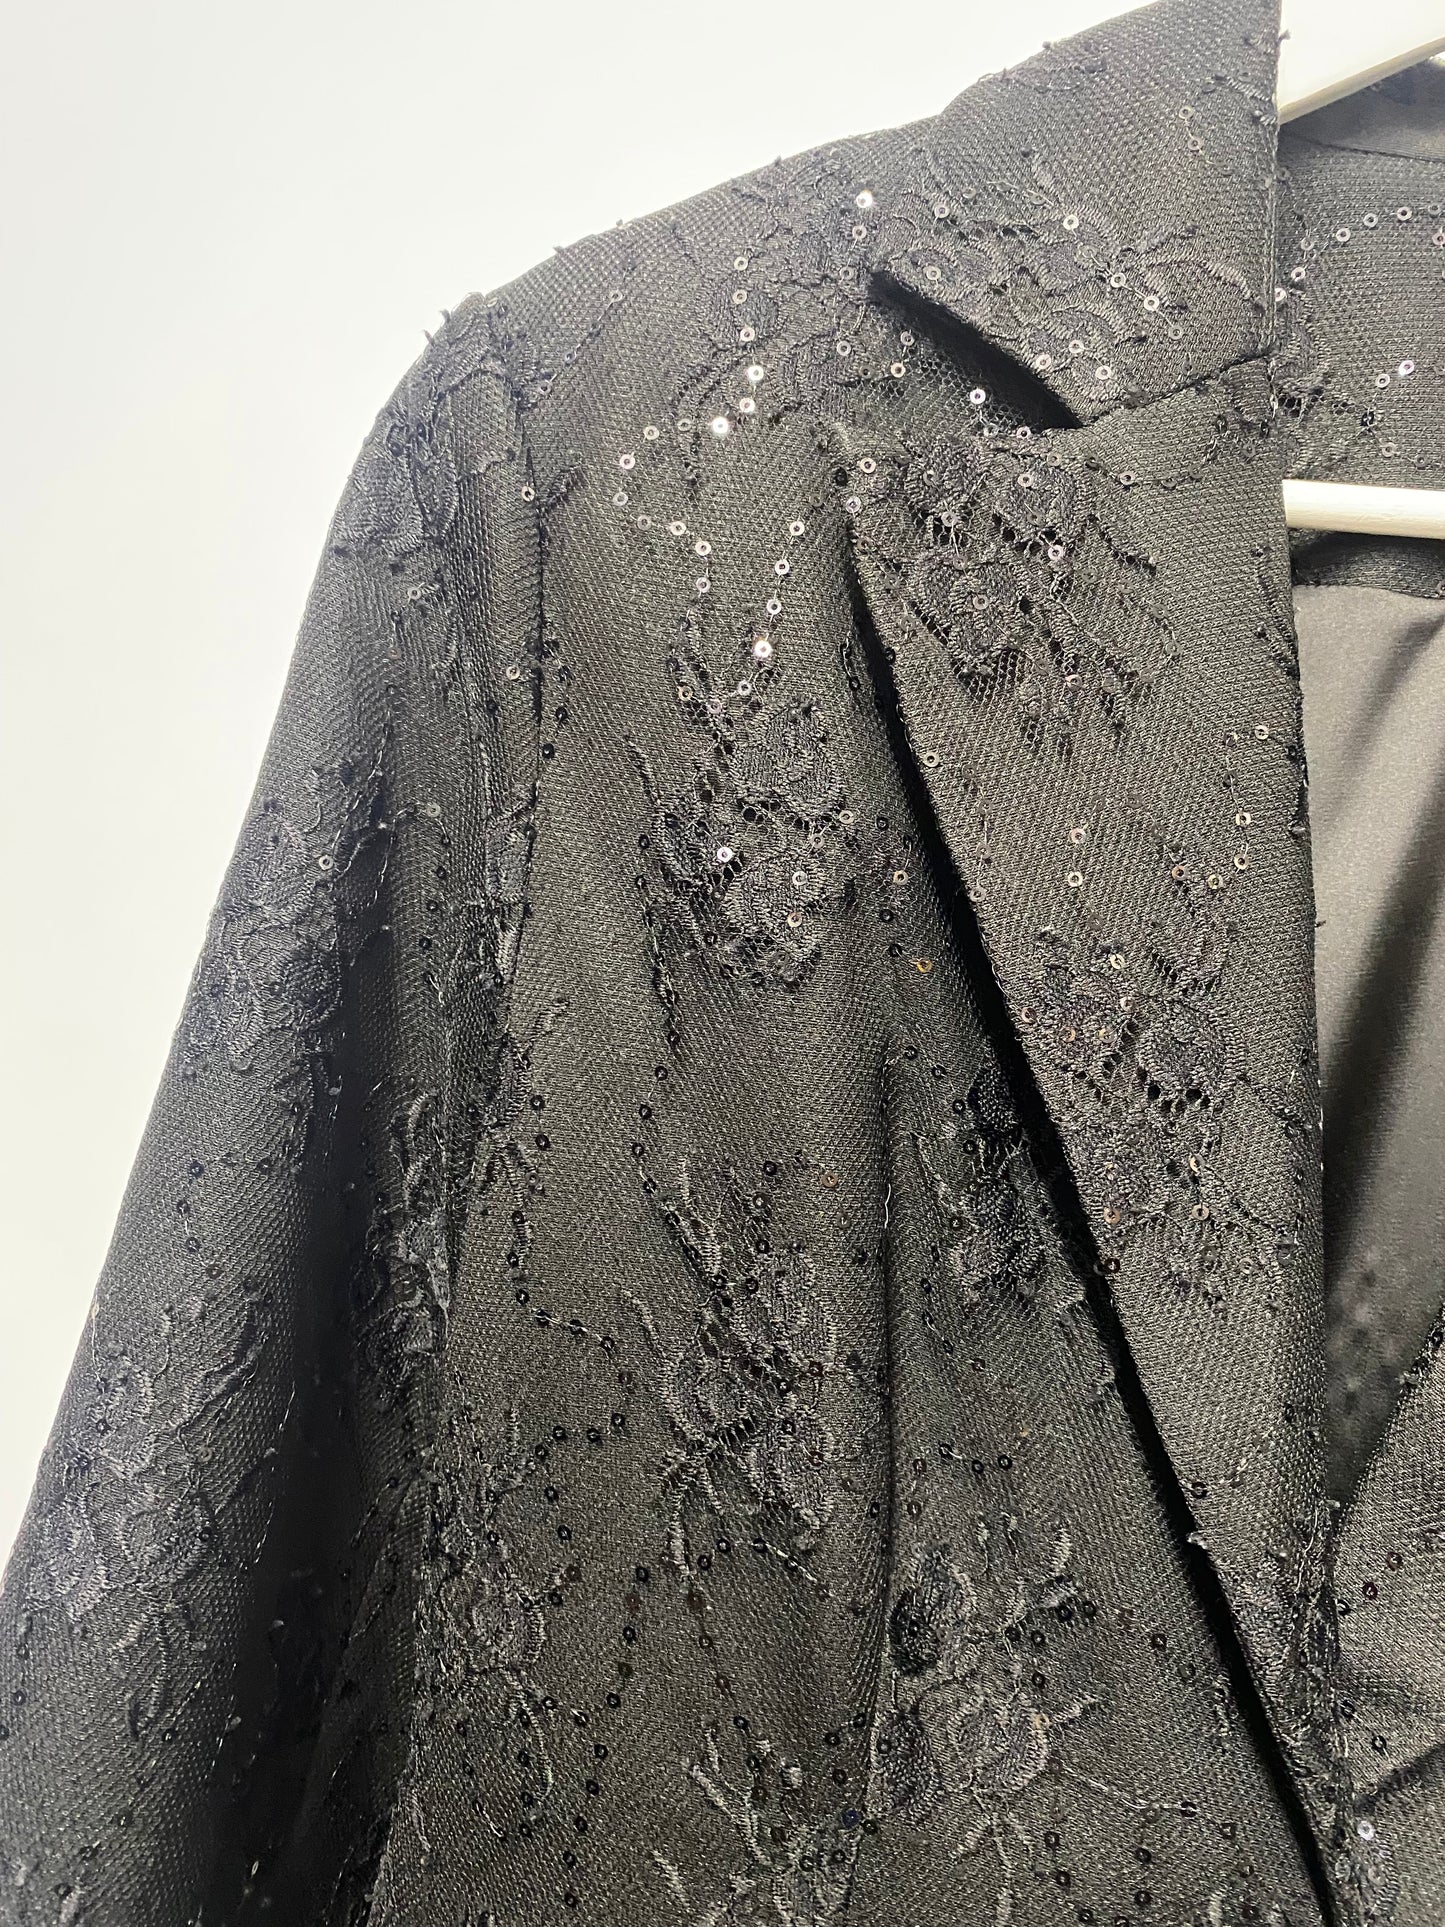 SLA The Label Black Lace Overlay Silk Two-Piece Suit Medium